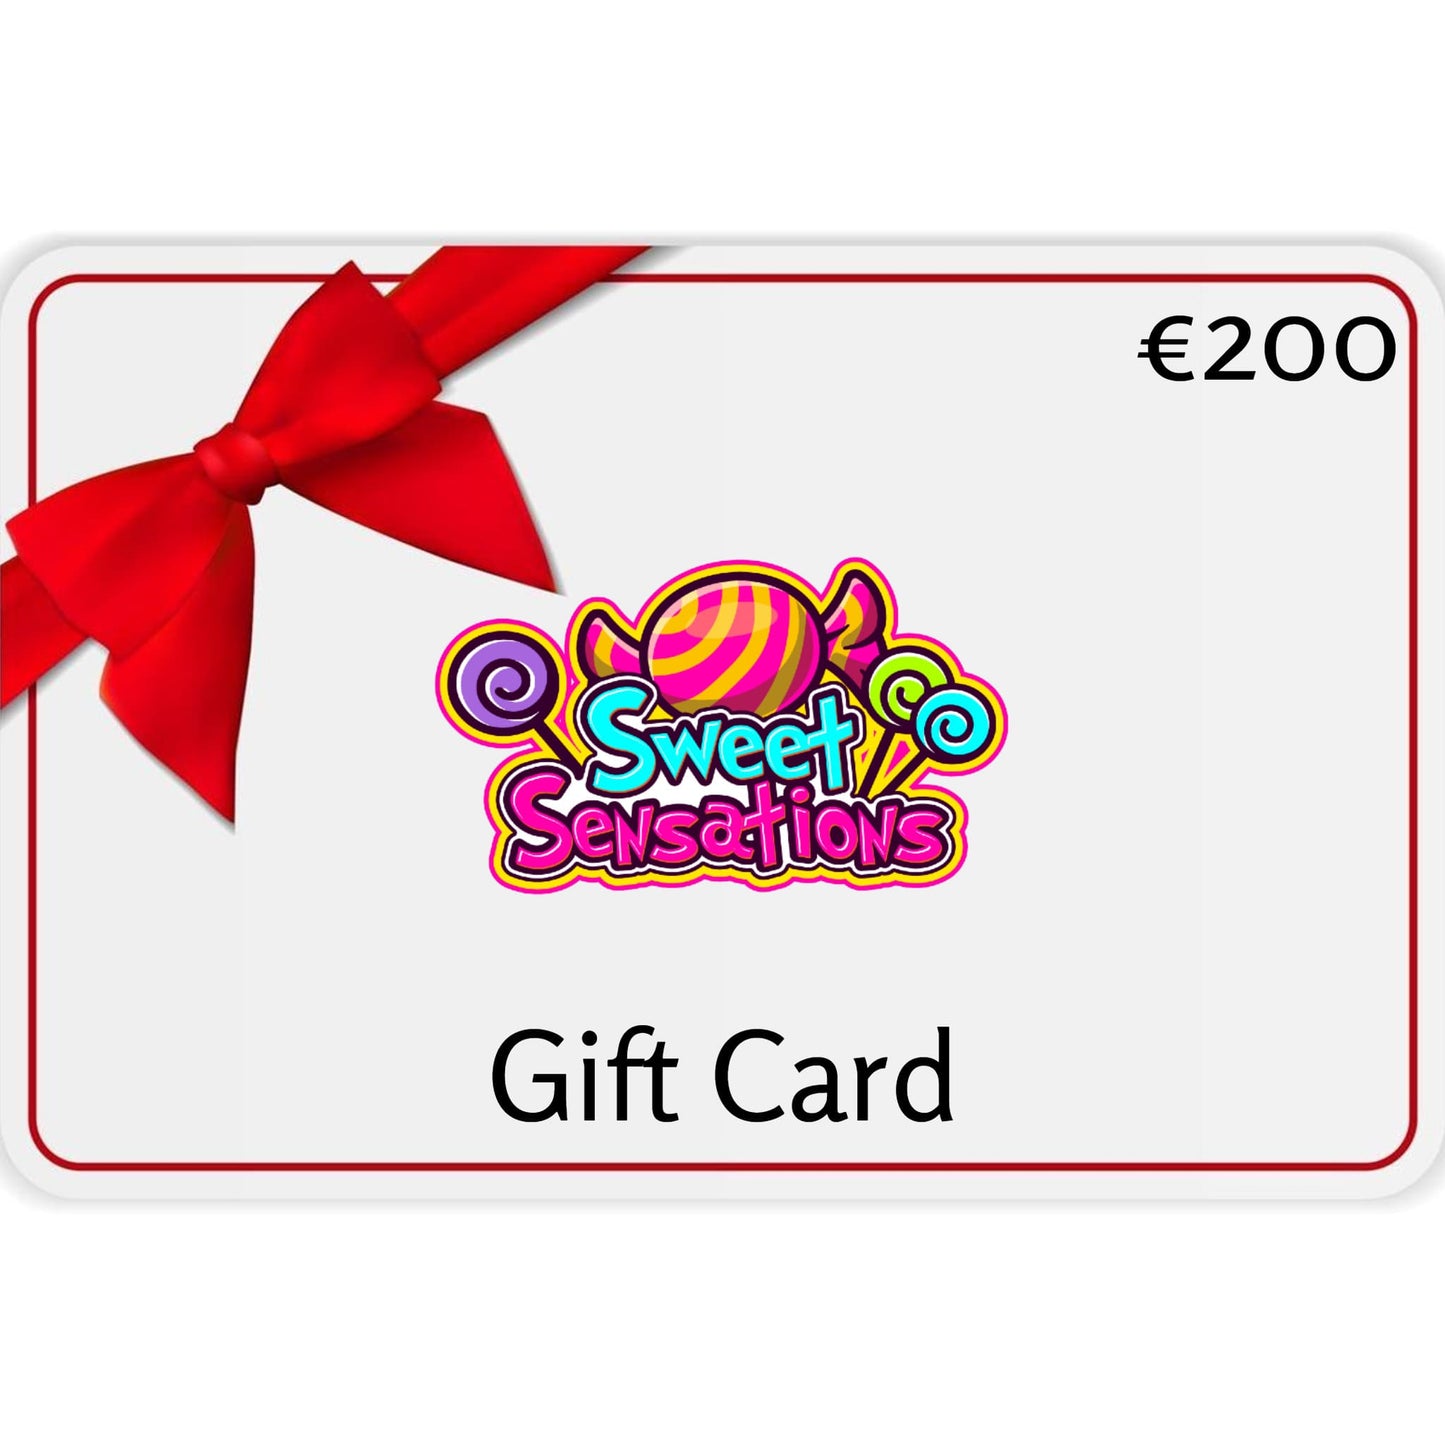 Sweet Sensations €200 Gift Card